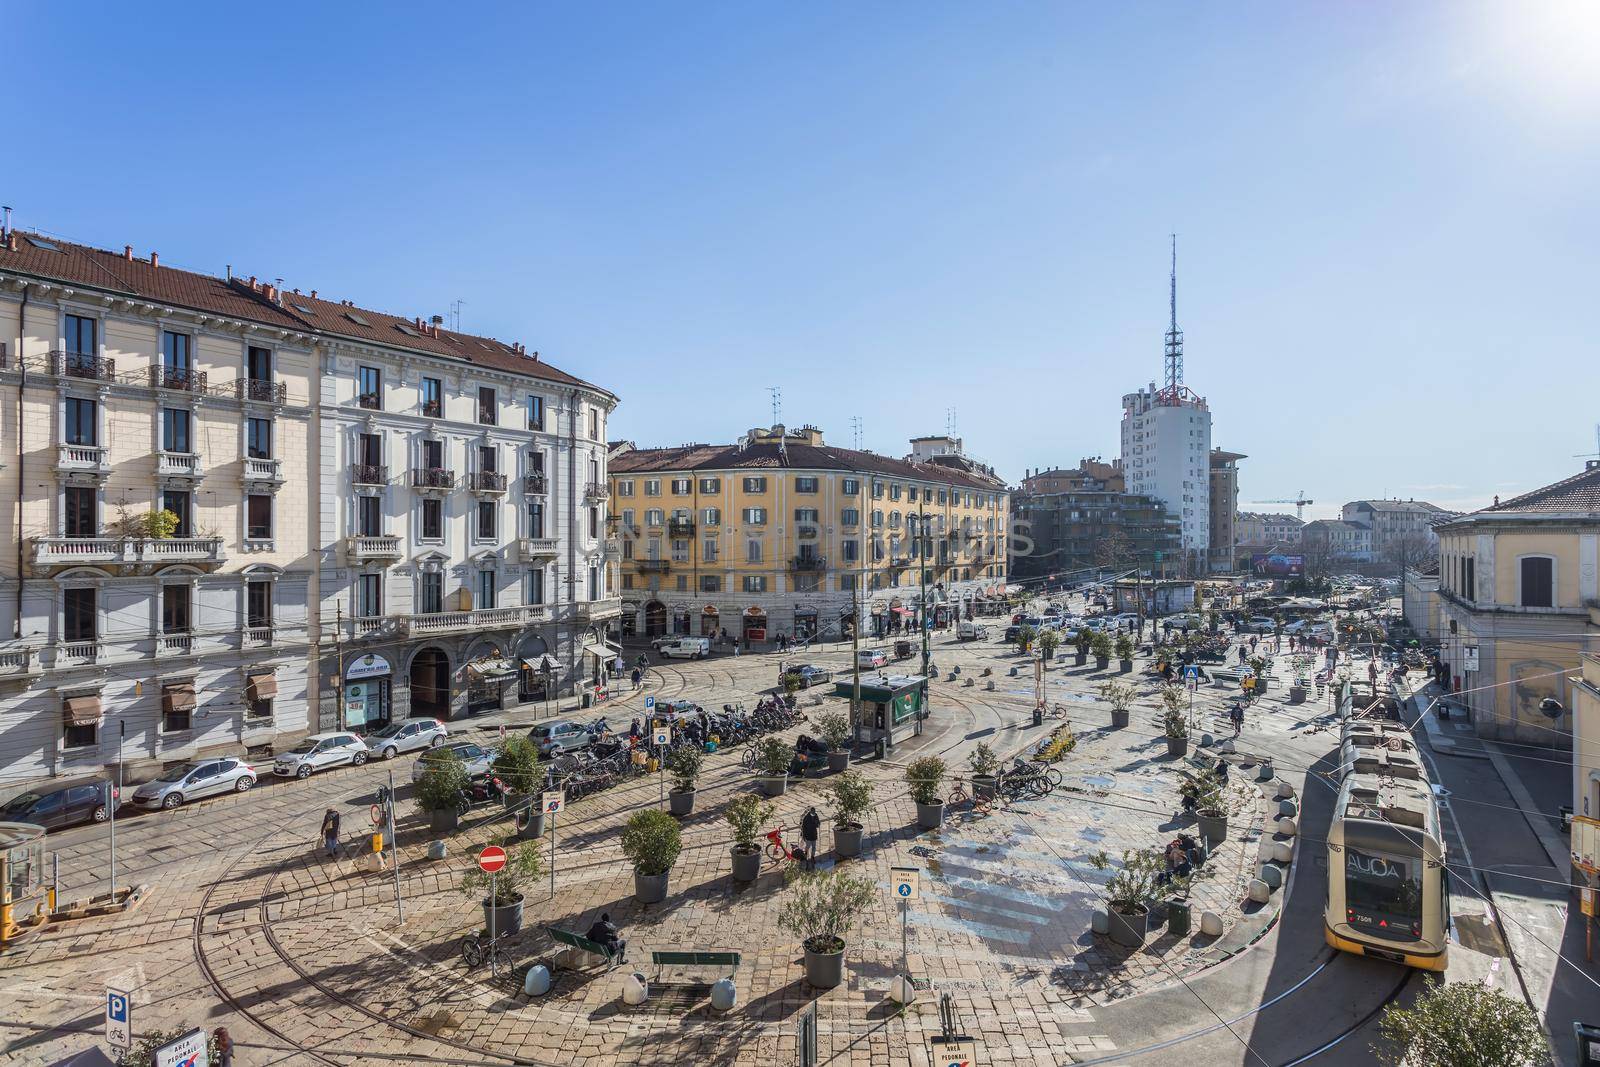 Porta Genova station in Milan, ITALY - February 8, 2021.